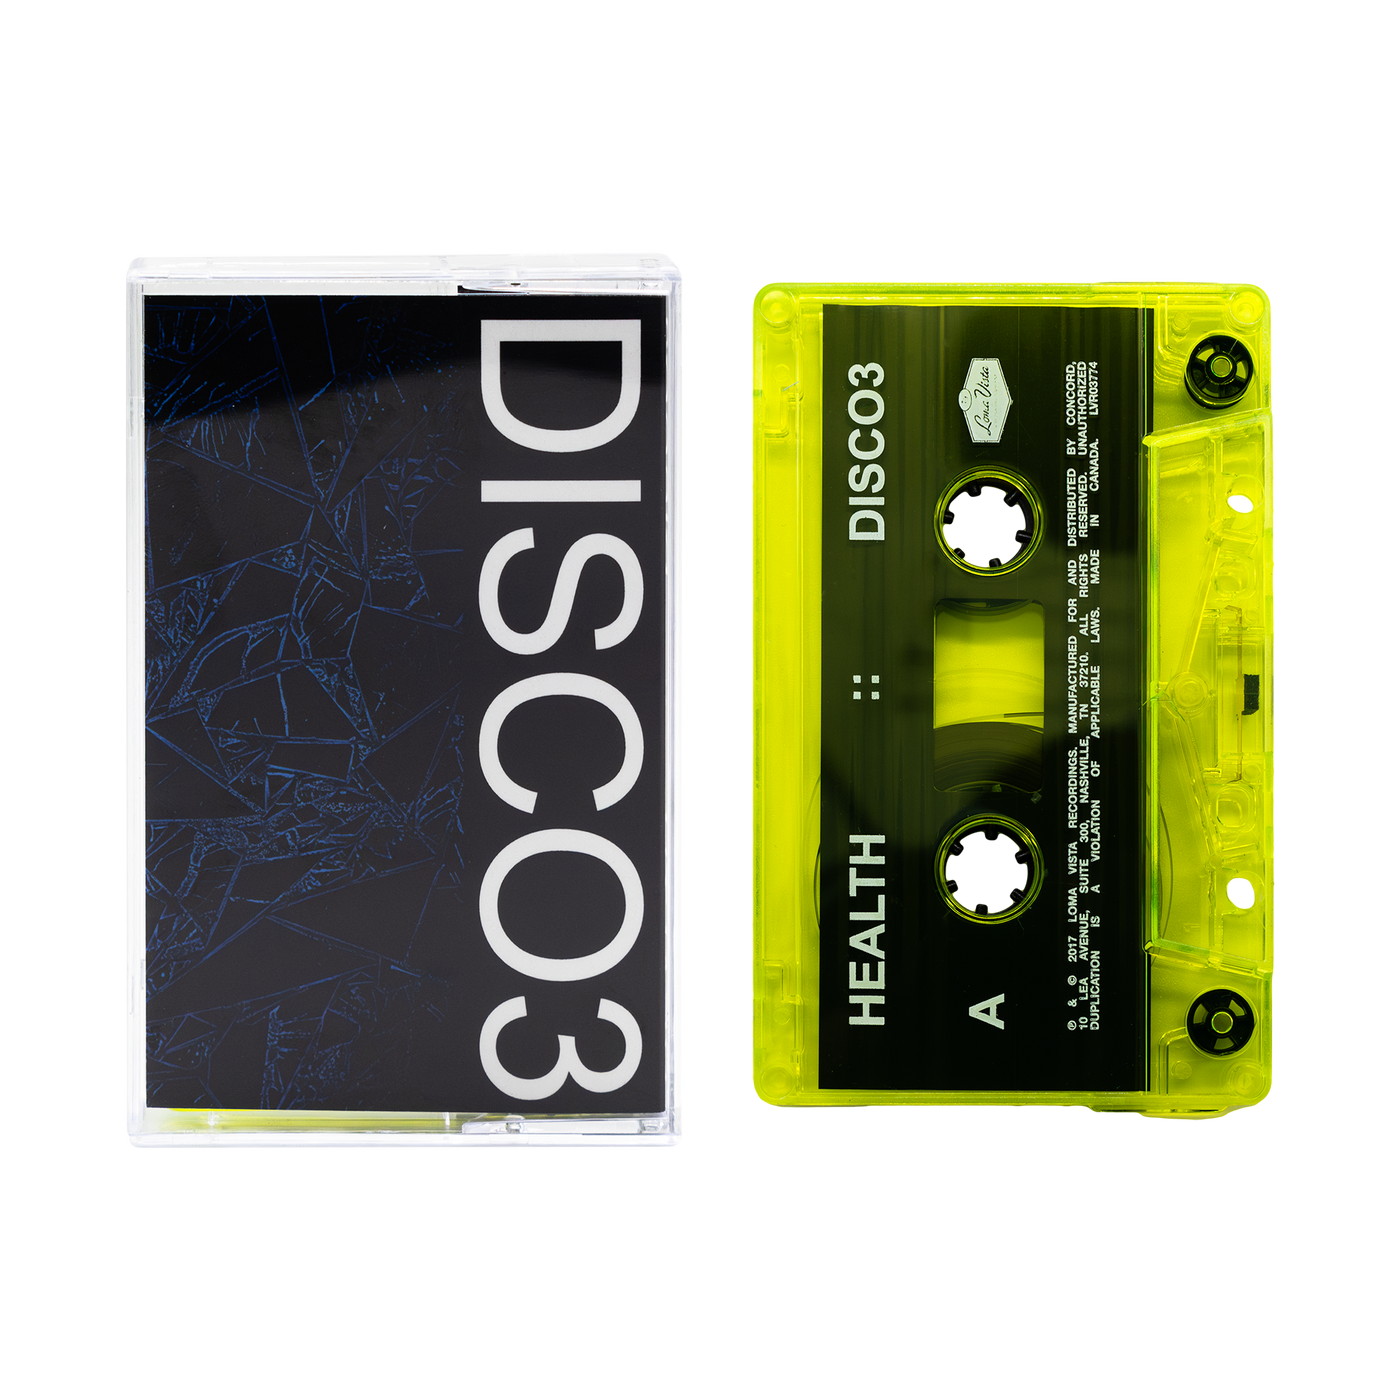 Disco 3 Translucent Yellow Cassette